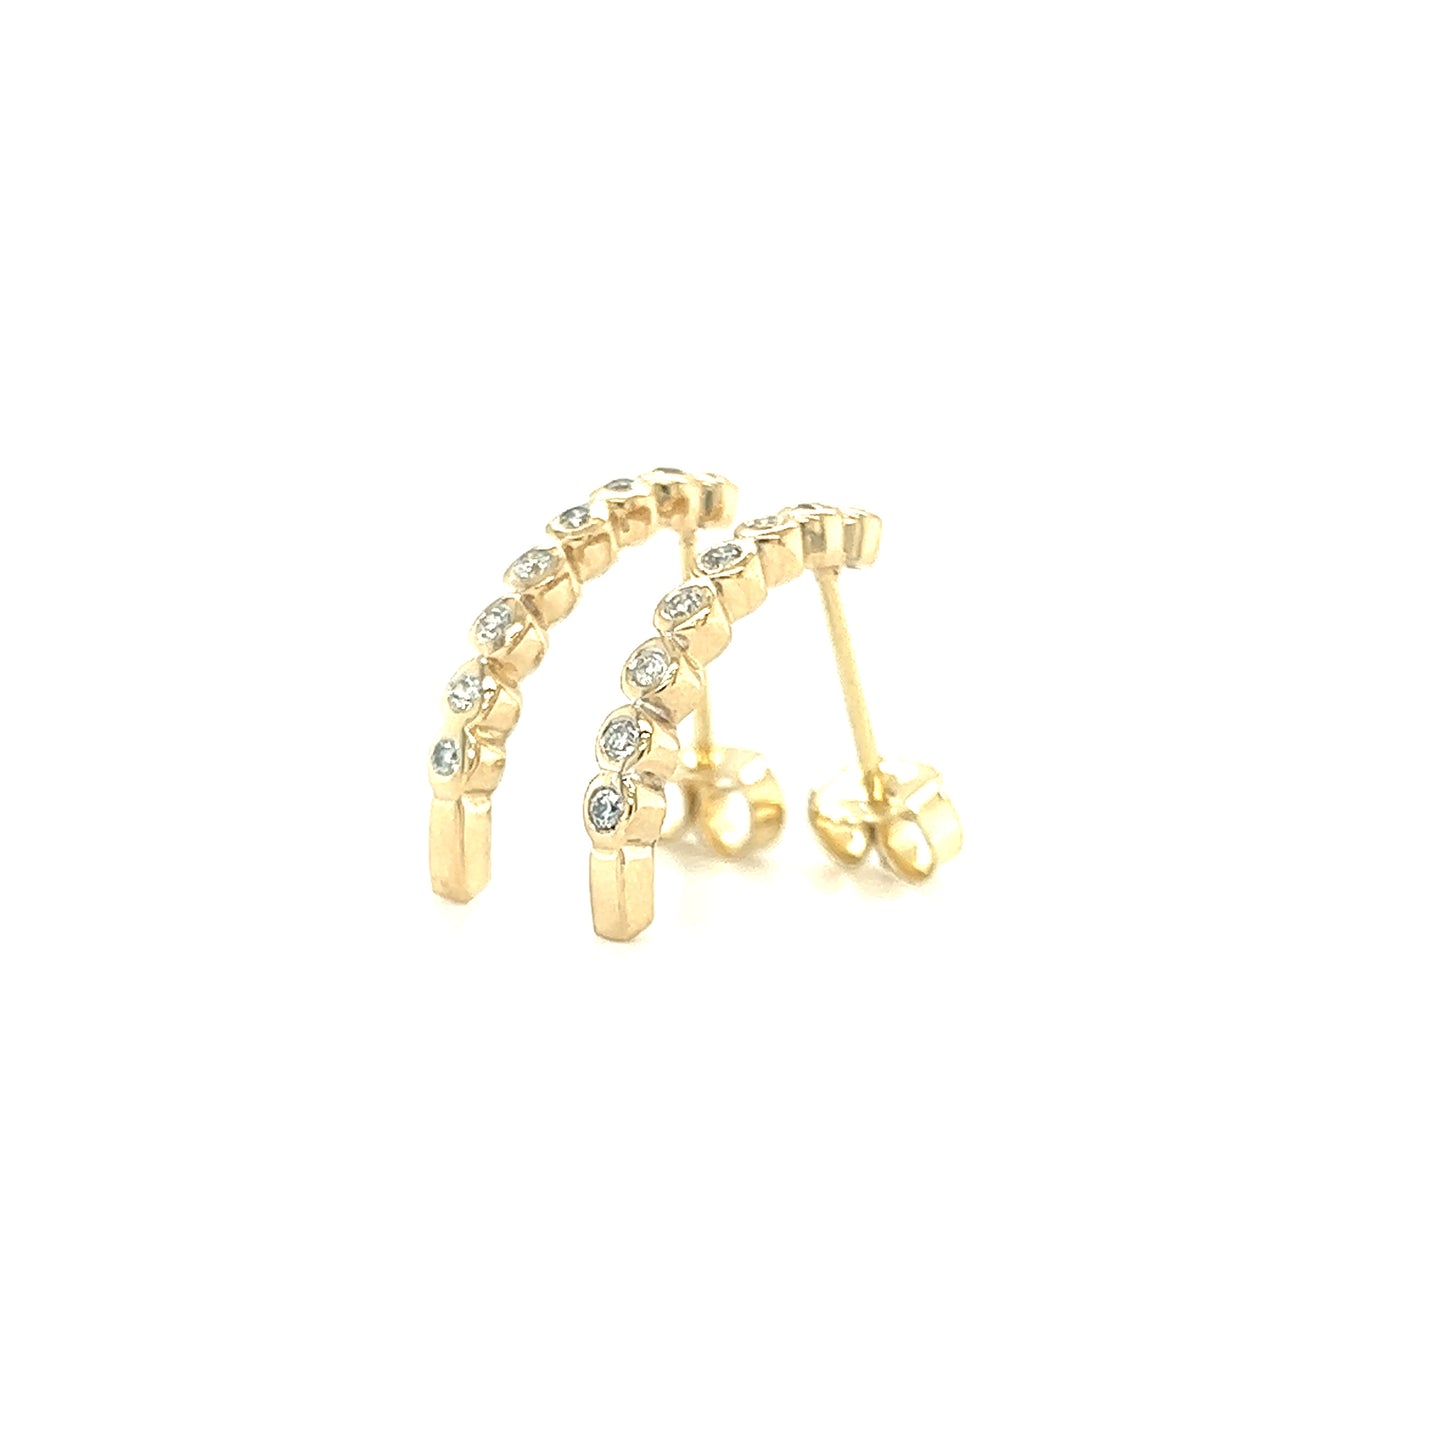 J-Hoop Earrings with Sixteen Diamonds in 14K Yellow Gold Standing Side View Alternate